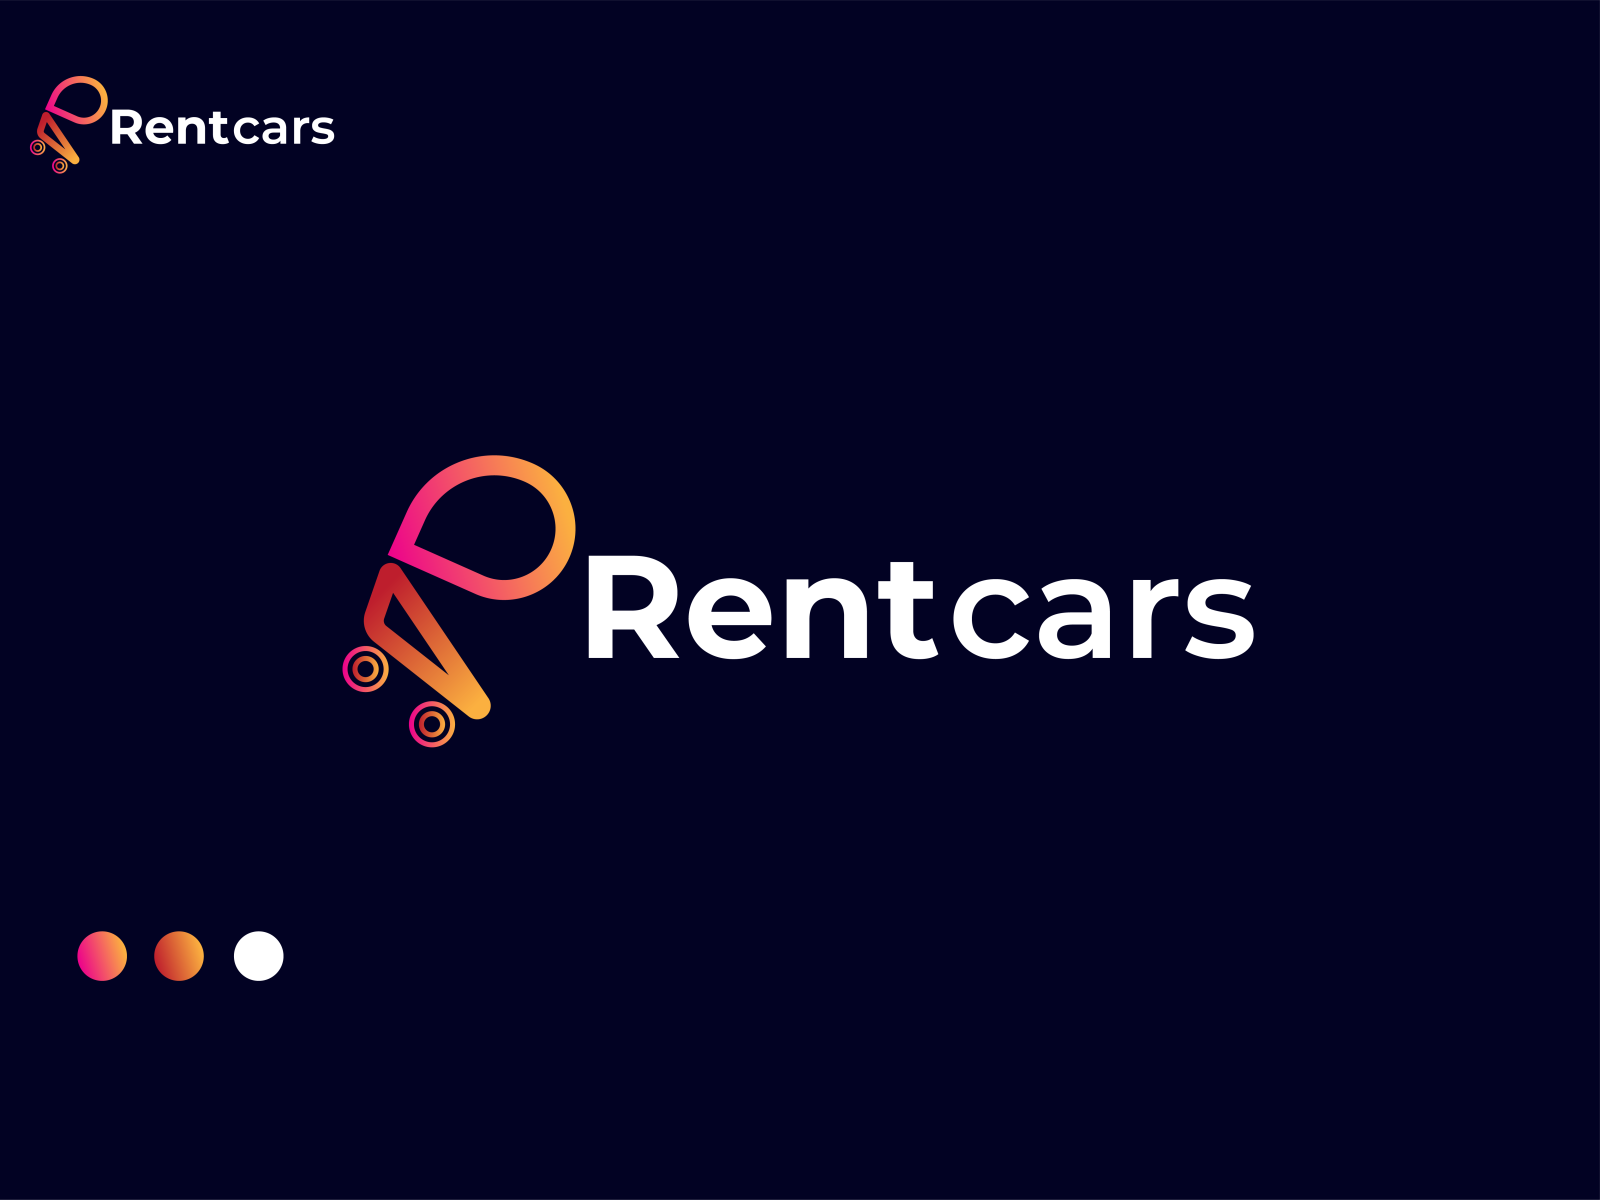 Rentcars 3d abstract logo mark by Mahbub Brand| Logo and Brand Identity ...